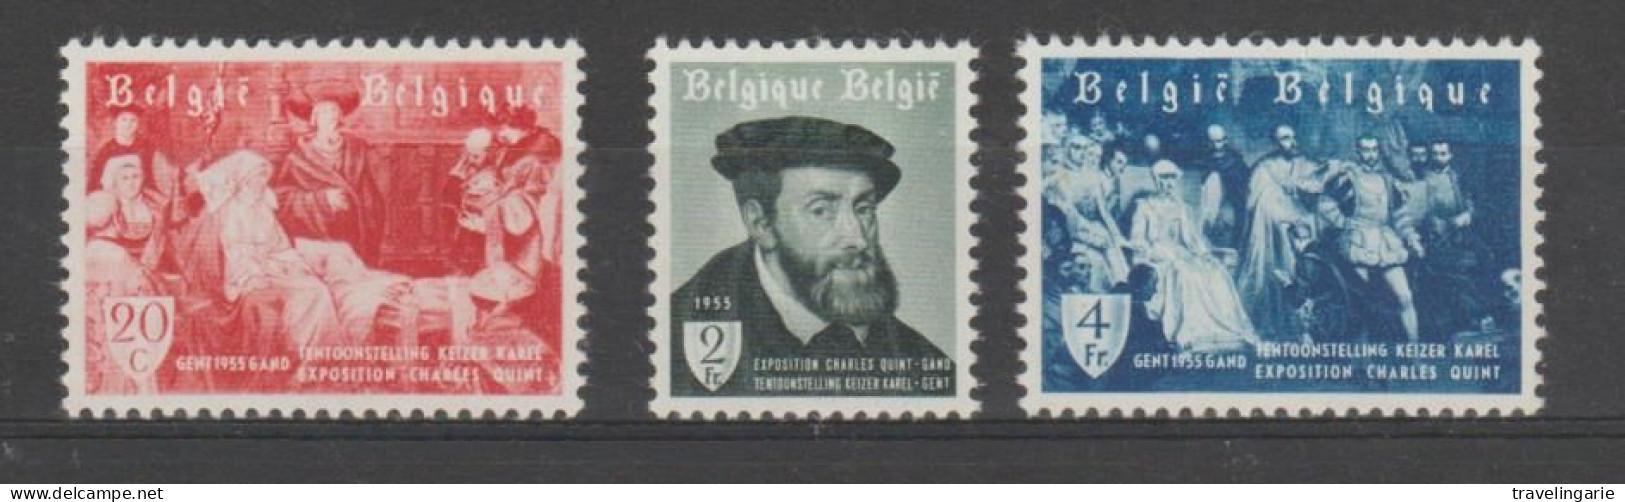 Belgium 1955 Exhibition Emperor Charles Quint (1500-1558) MNH ** - Koniklijke Families